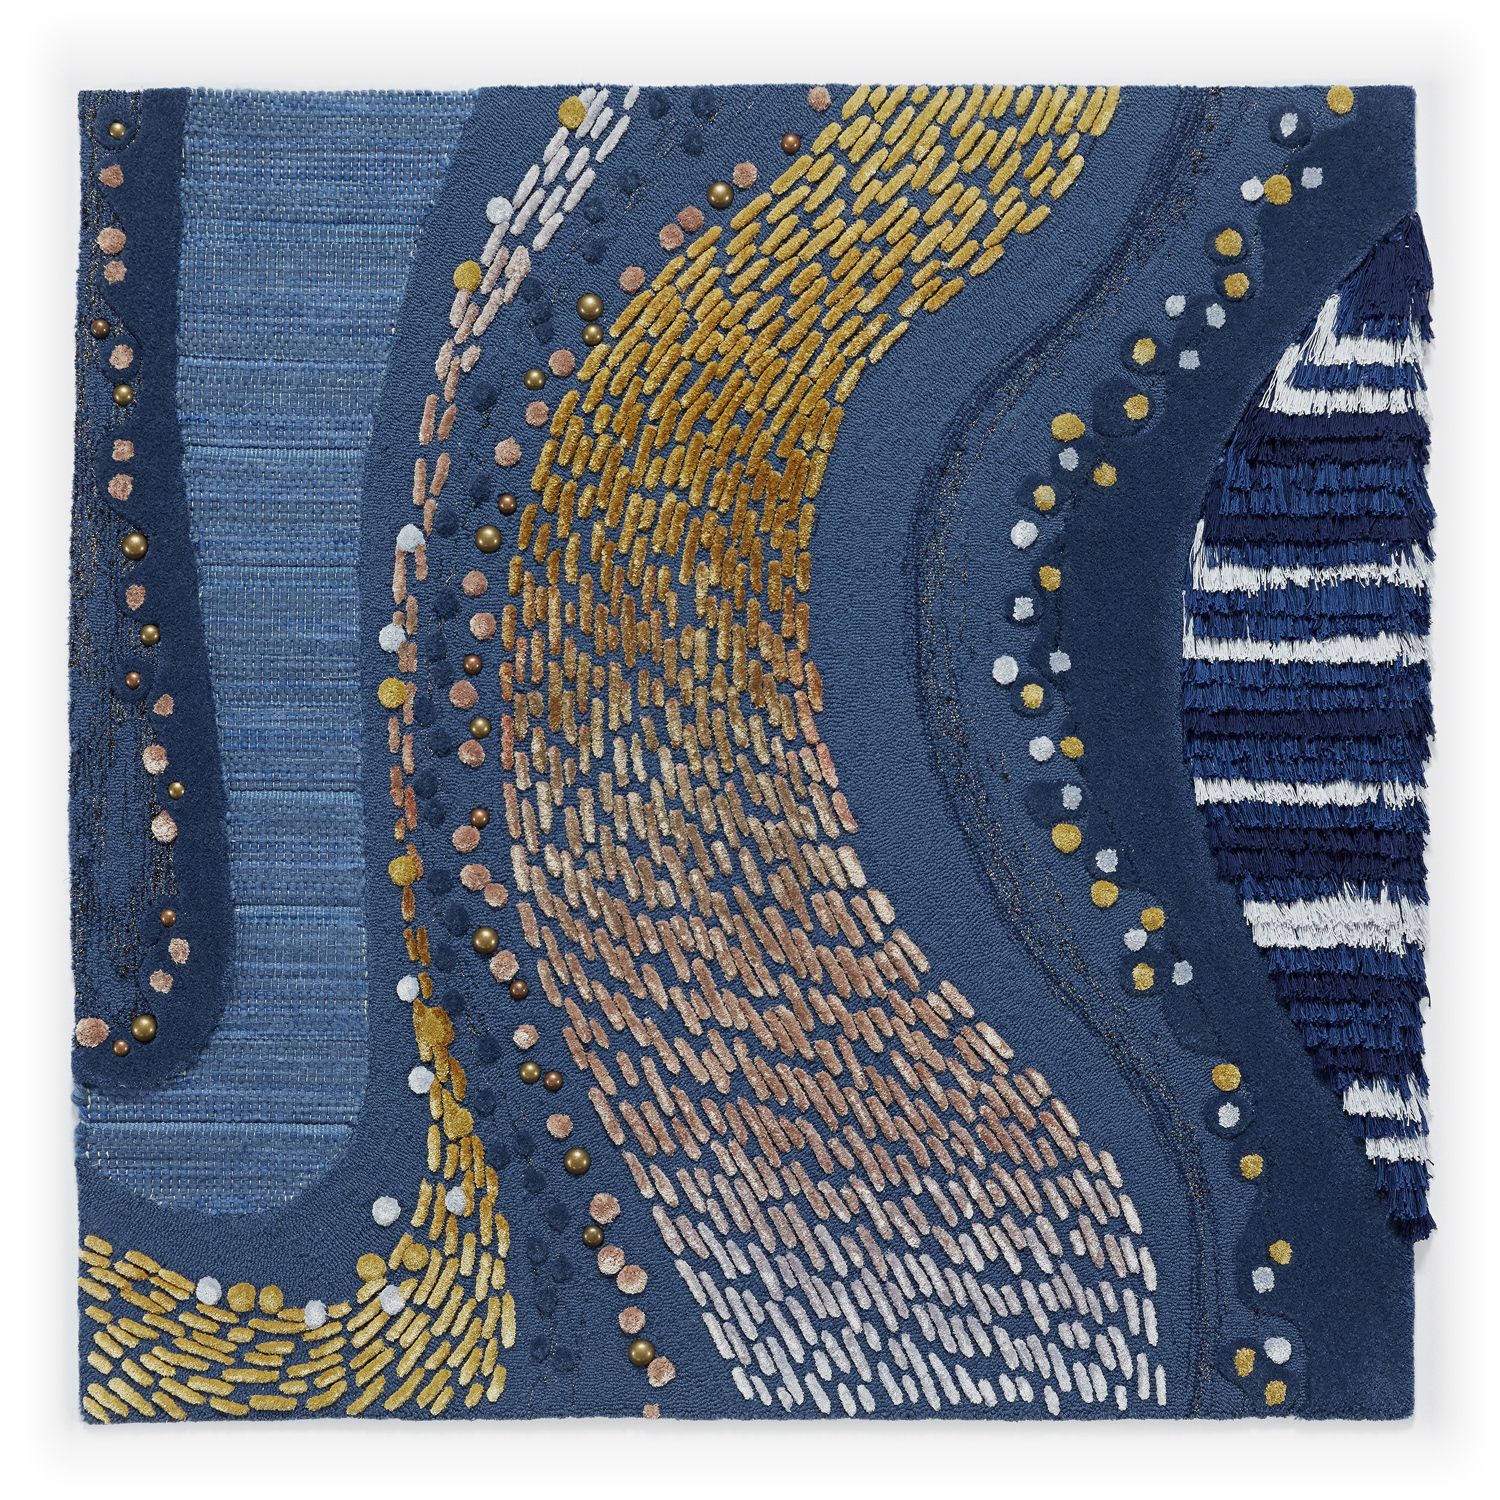 Null 艾尔莎-巴比伦（生于1988年）

蓝色阿罗约--独特的作品

挂毯

羊毛、丝绸、竹子、马海毛、卢勒克斯和金属

2021年创建的模型

140 ×&hellip;